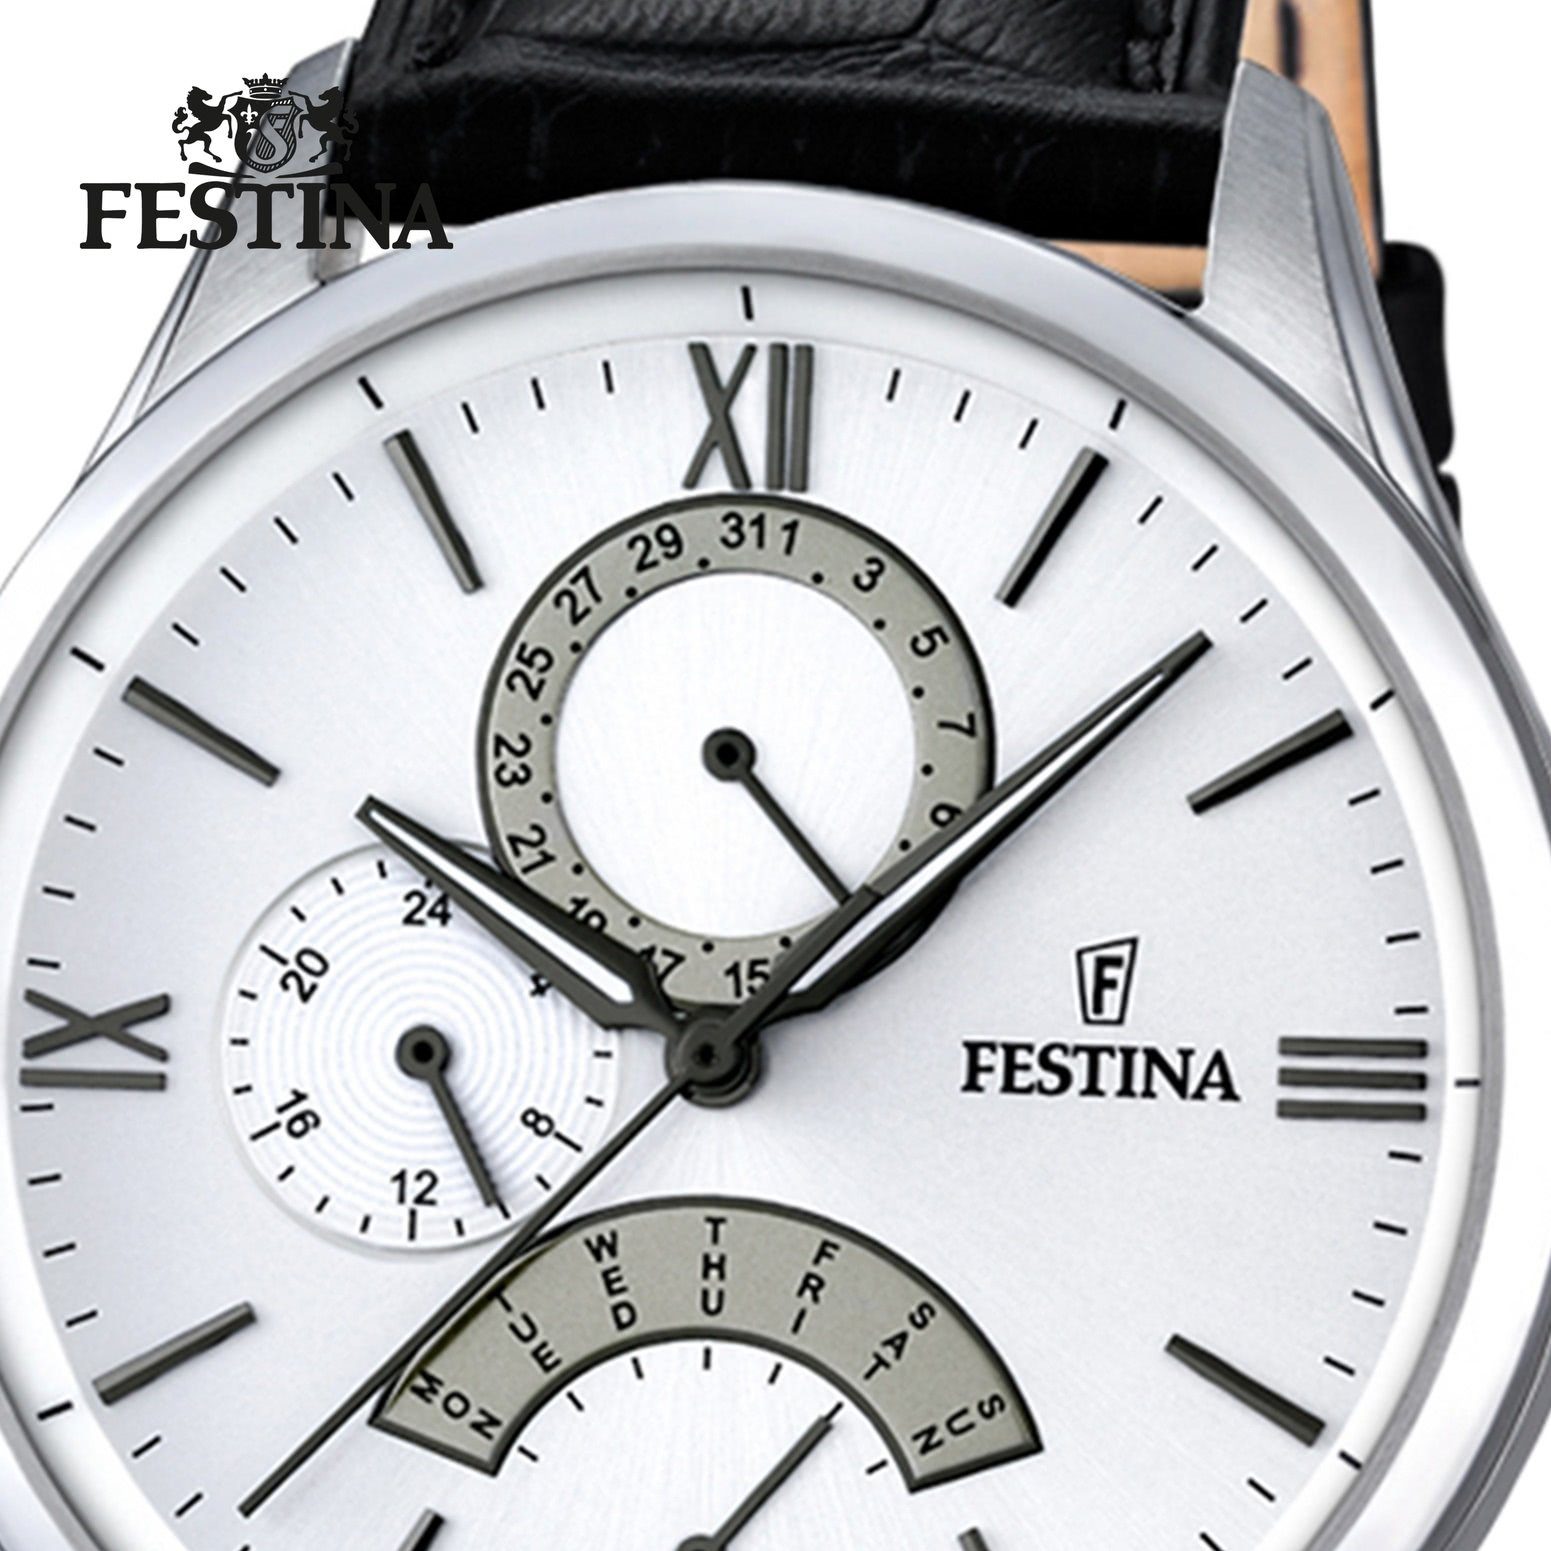 schwarz Festina Festina Lederarmband Herren Uhr rund, F16823/1, Multifunktionsuhr Armbanduhr Herren